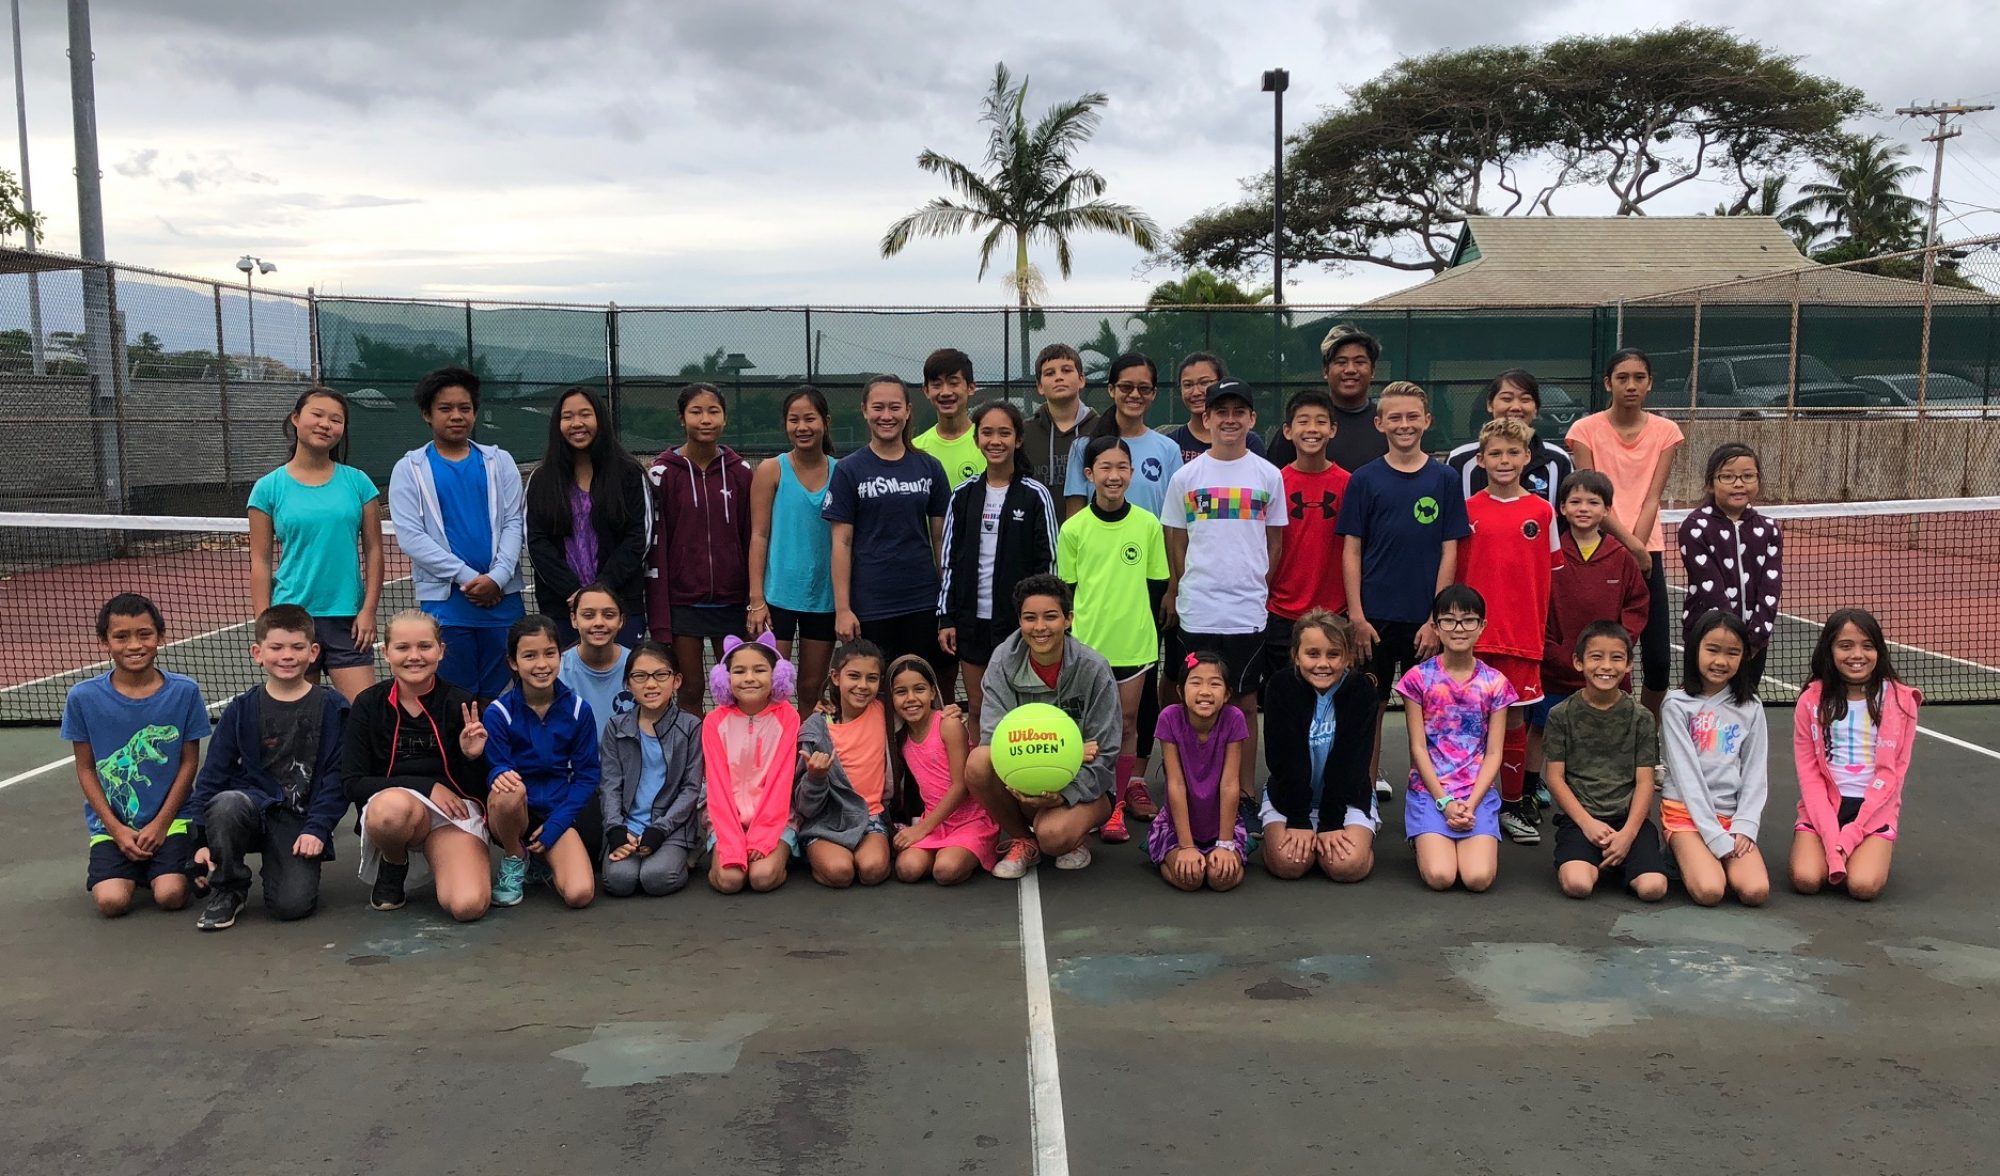 Wailuku Junior Tennis Club